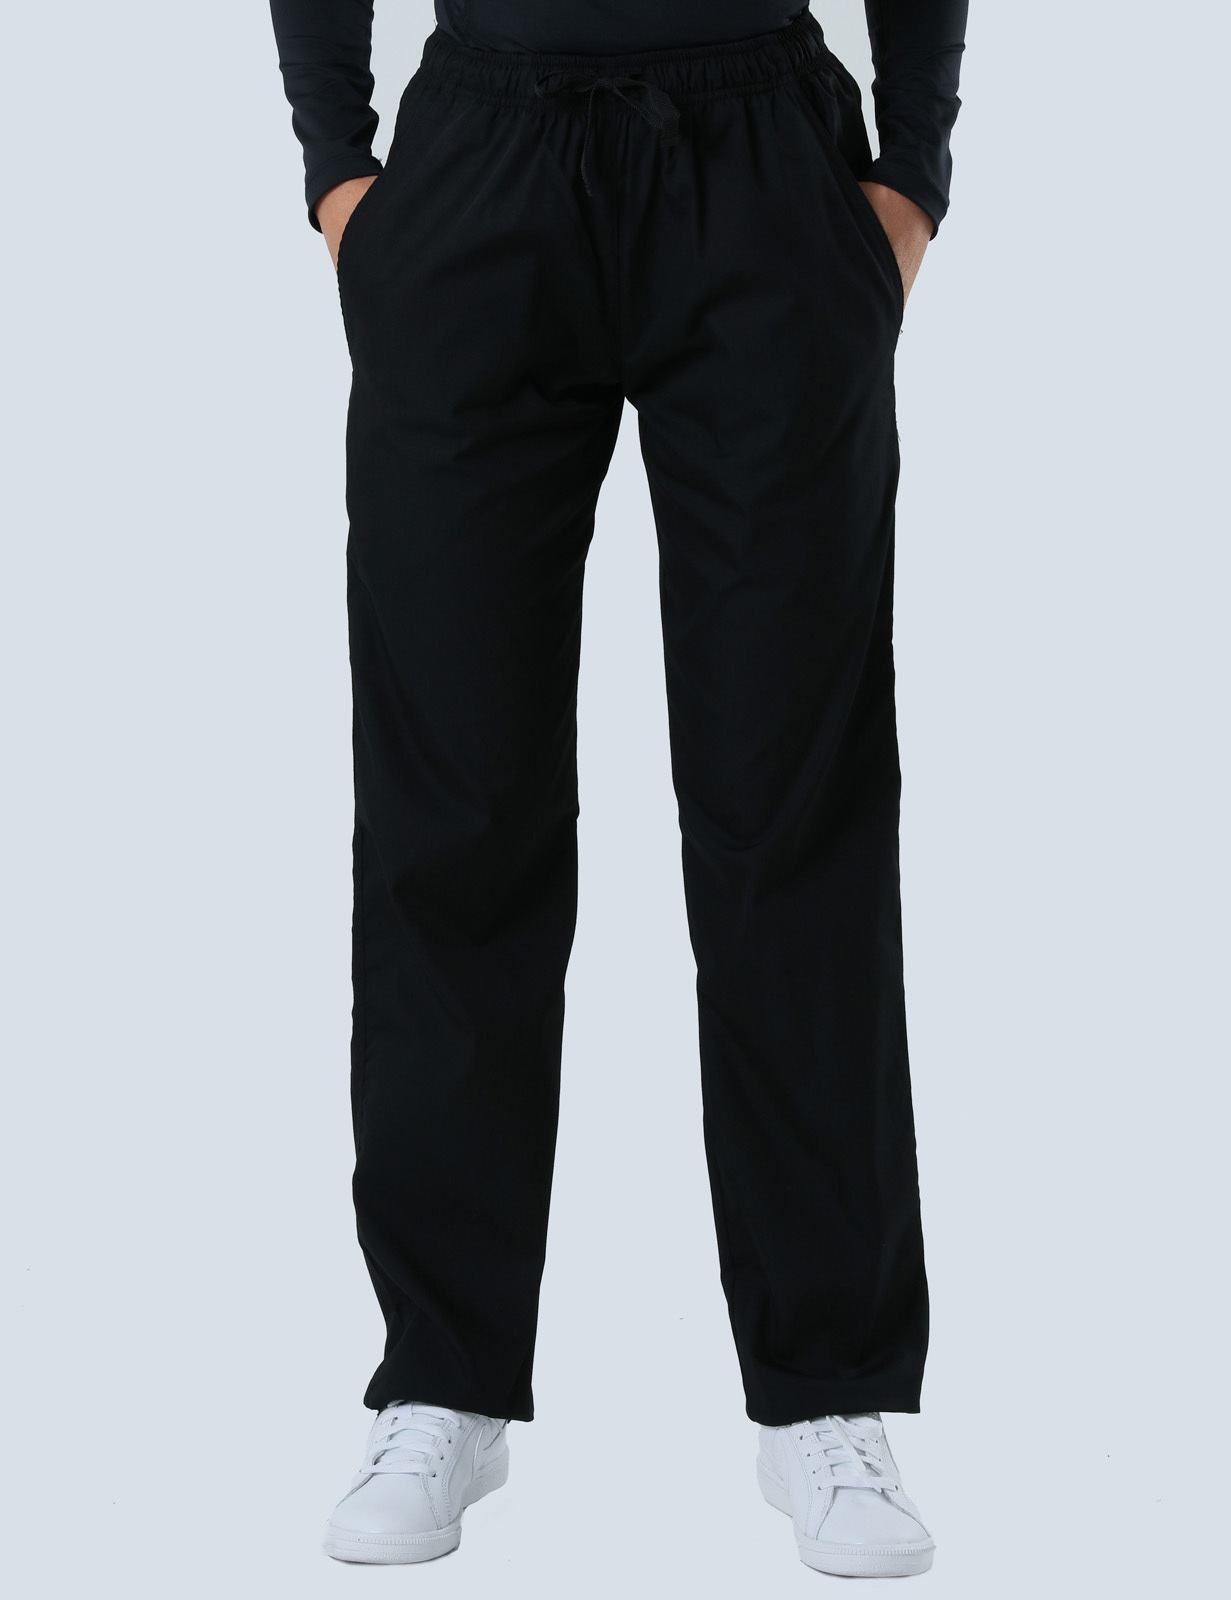 Women's Utility Pants - Black - 3X Large